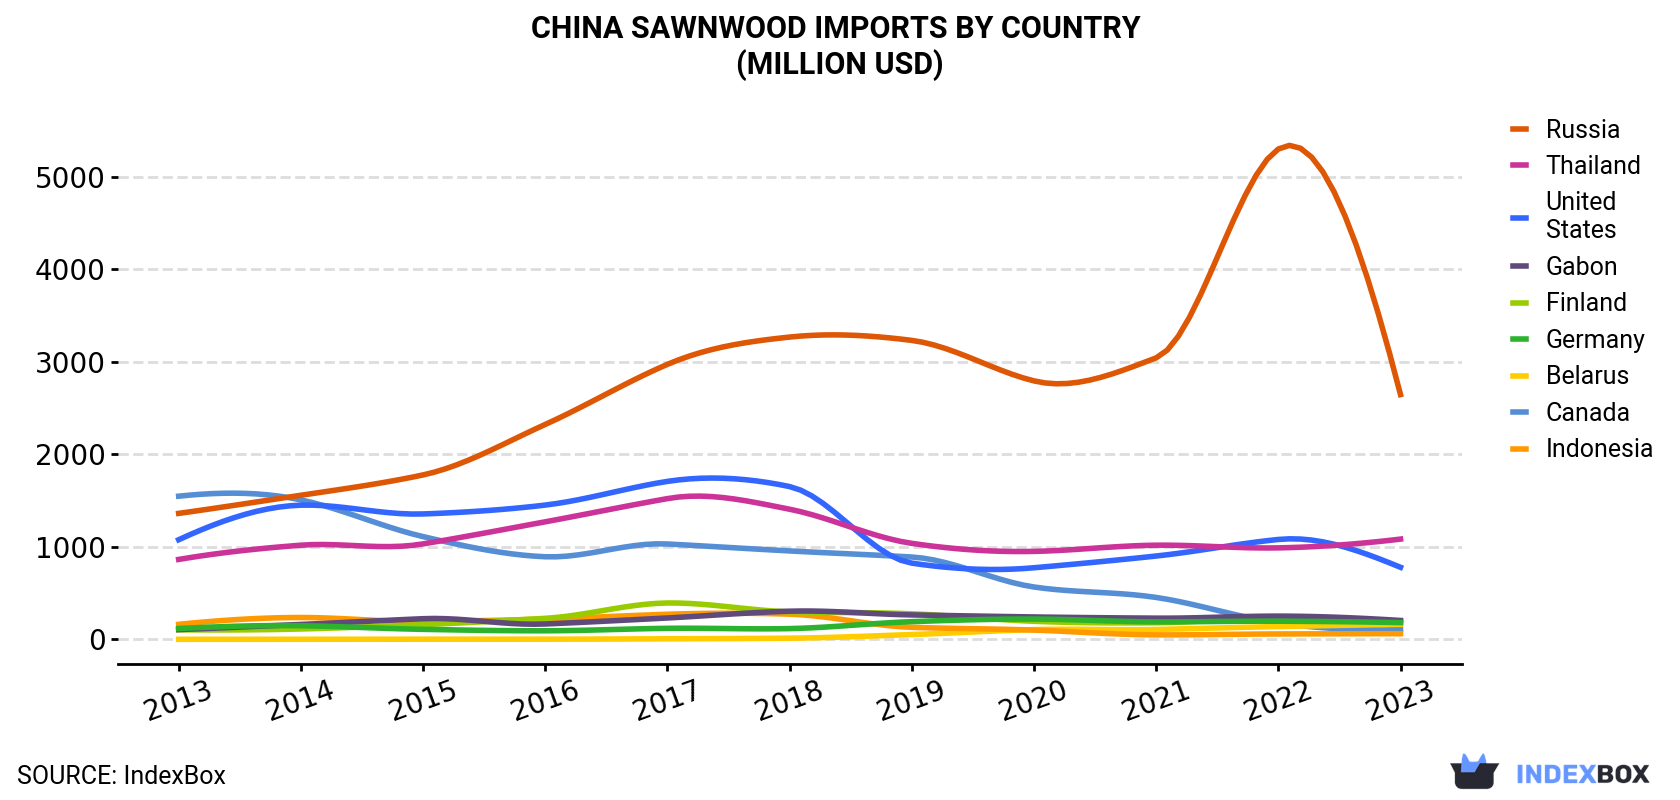 China Sawnwood Imports By Country (Million USD)